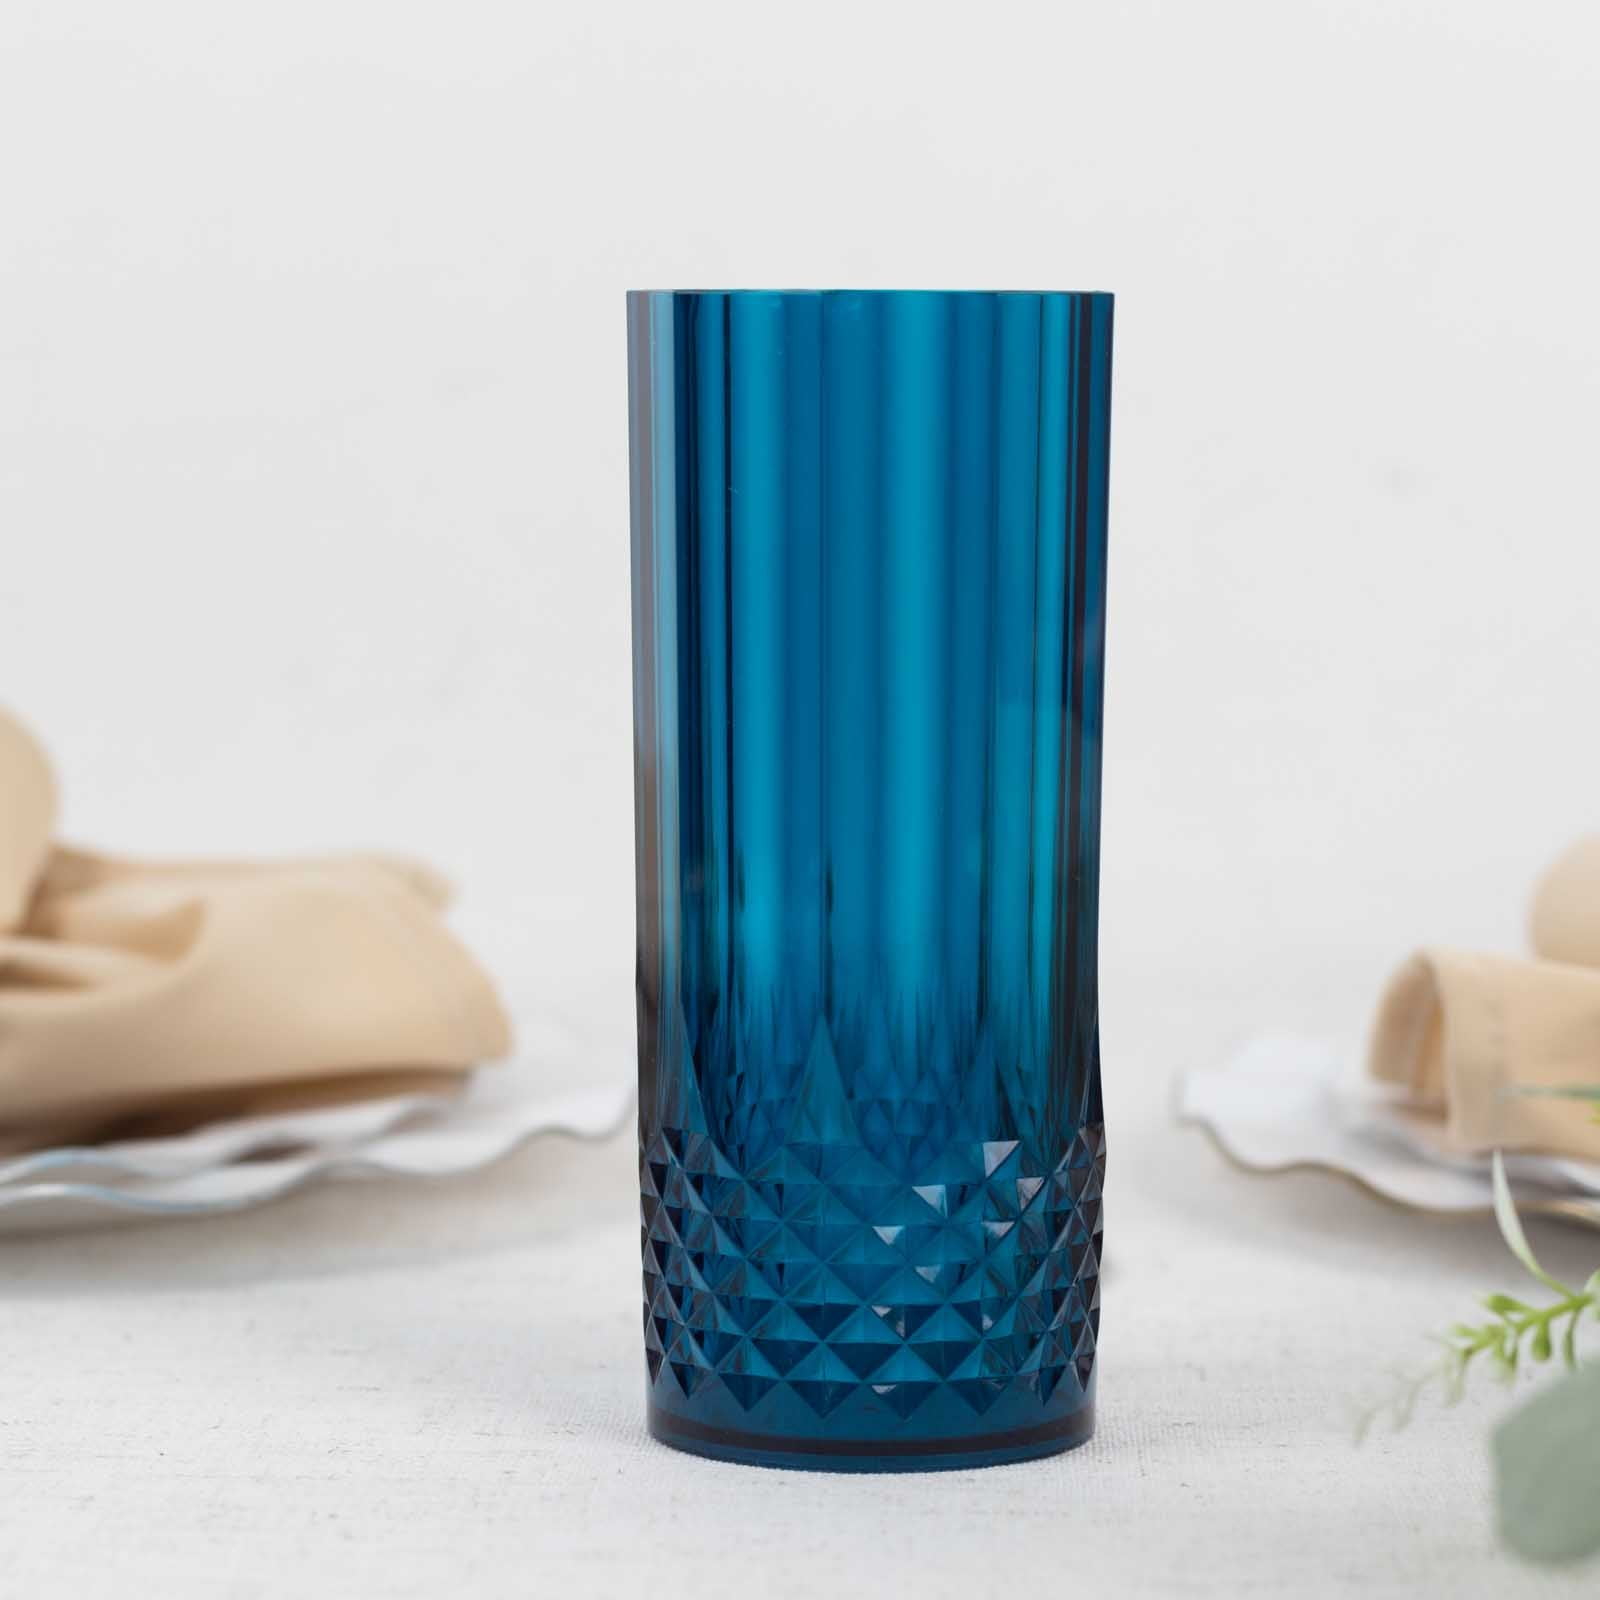 Threshold Blue Plastic Textured Tall Tumbler Drinking Glass Cup 4 Piece Set  18oz